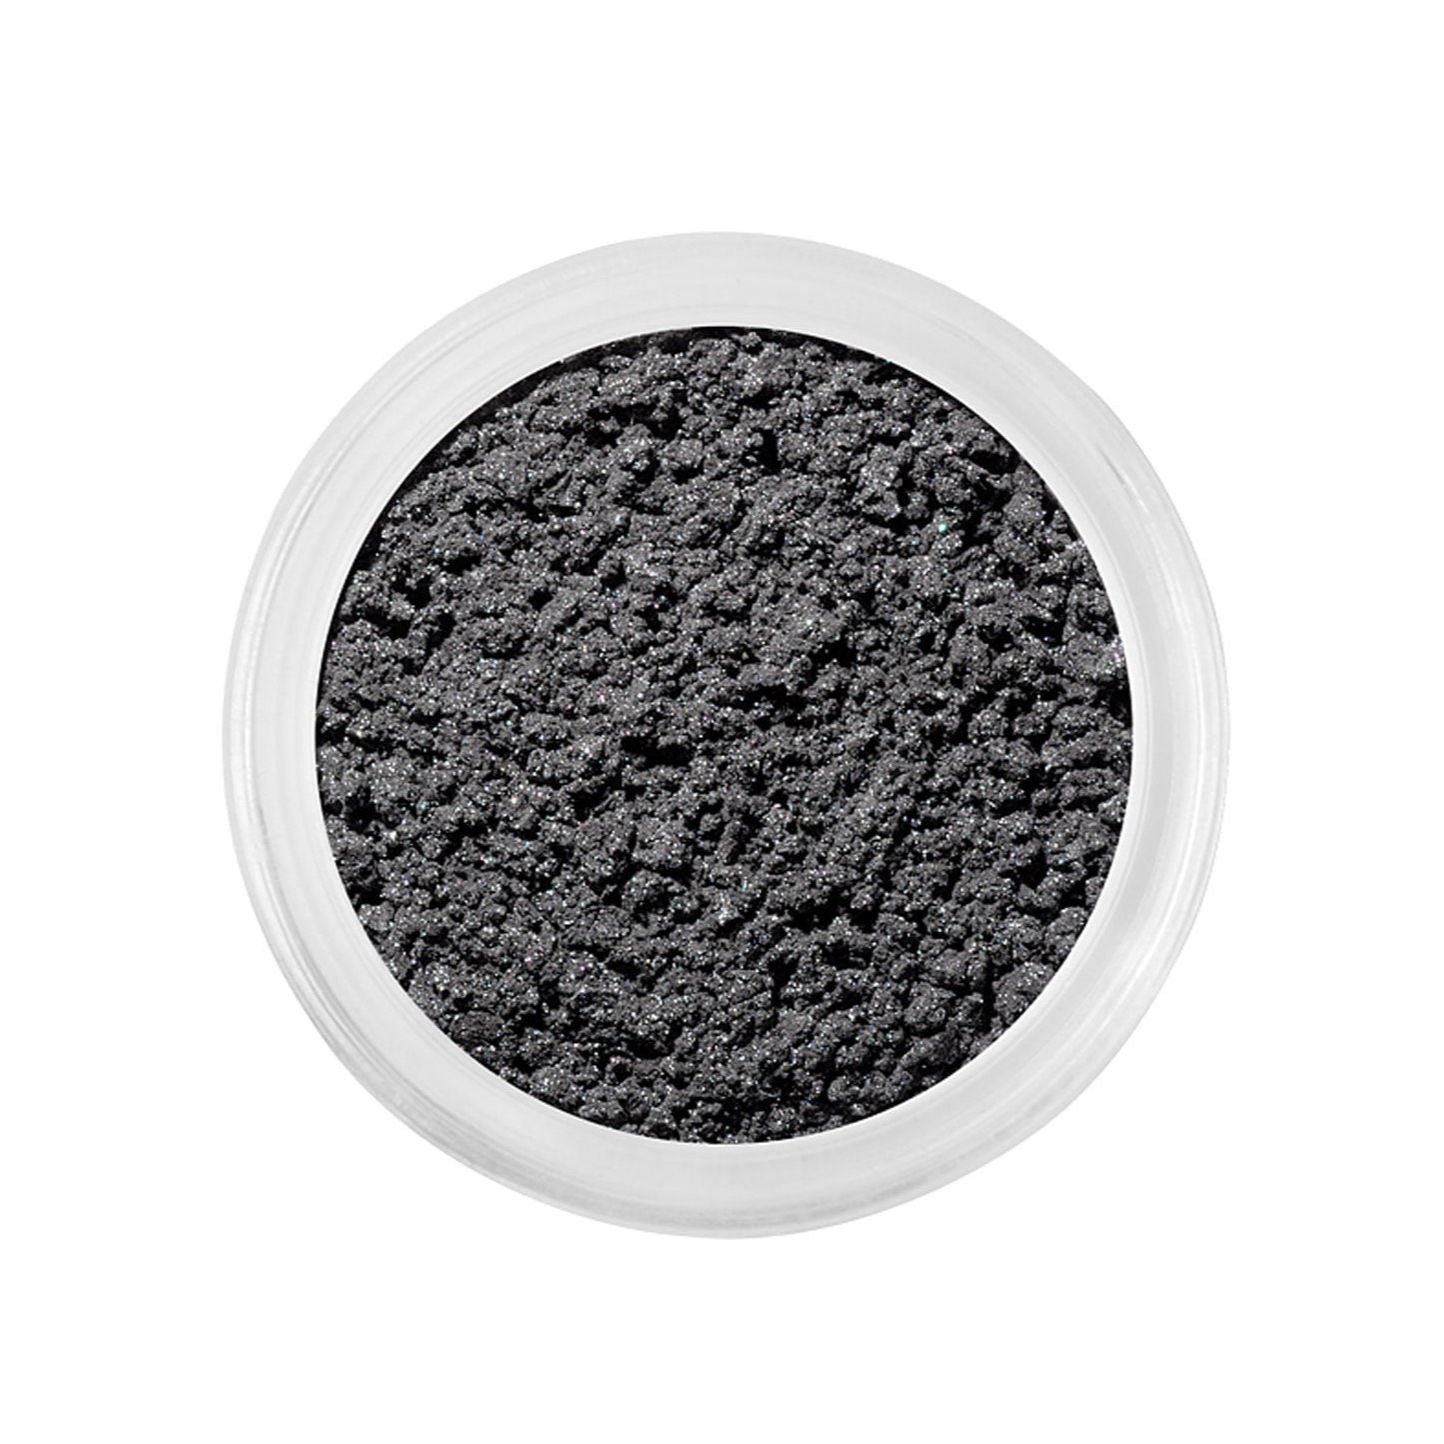 Bare Minerals Loose Powder Glimmer Eyeshadow, 0.02oz